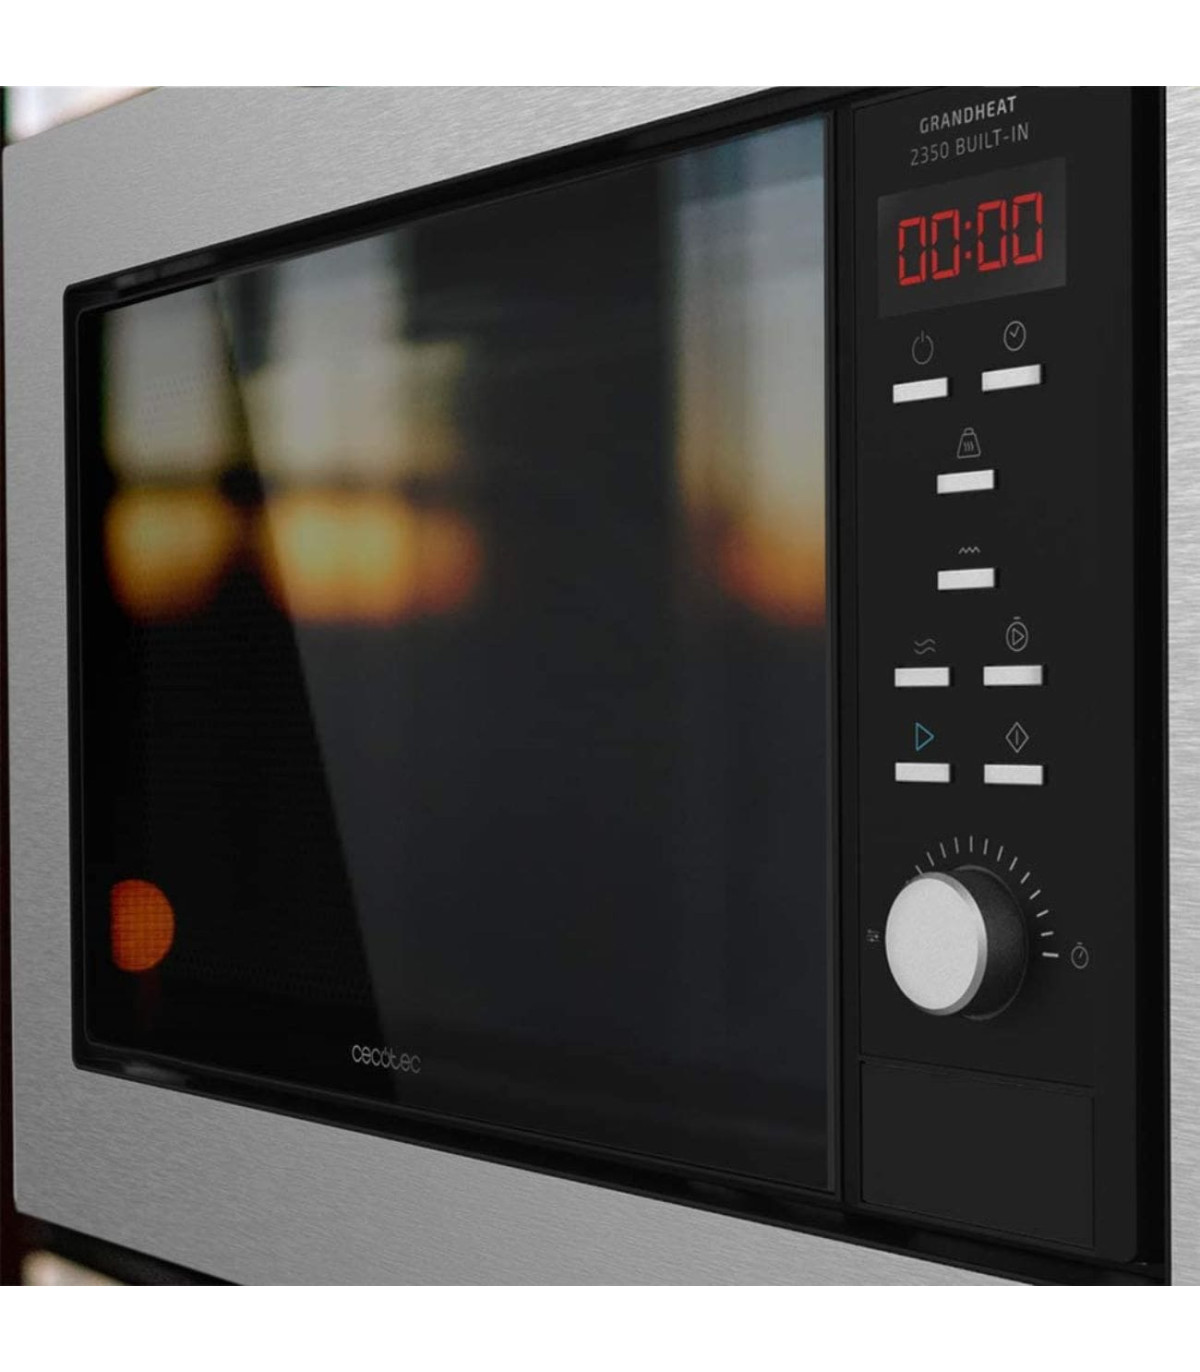 Microwave Cecotec GrandHeat 2350 de 23 litros integrado - Tenerife